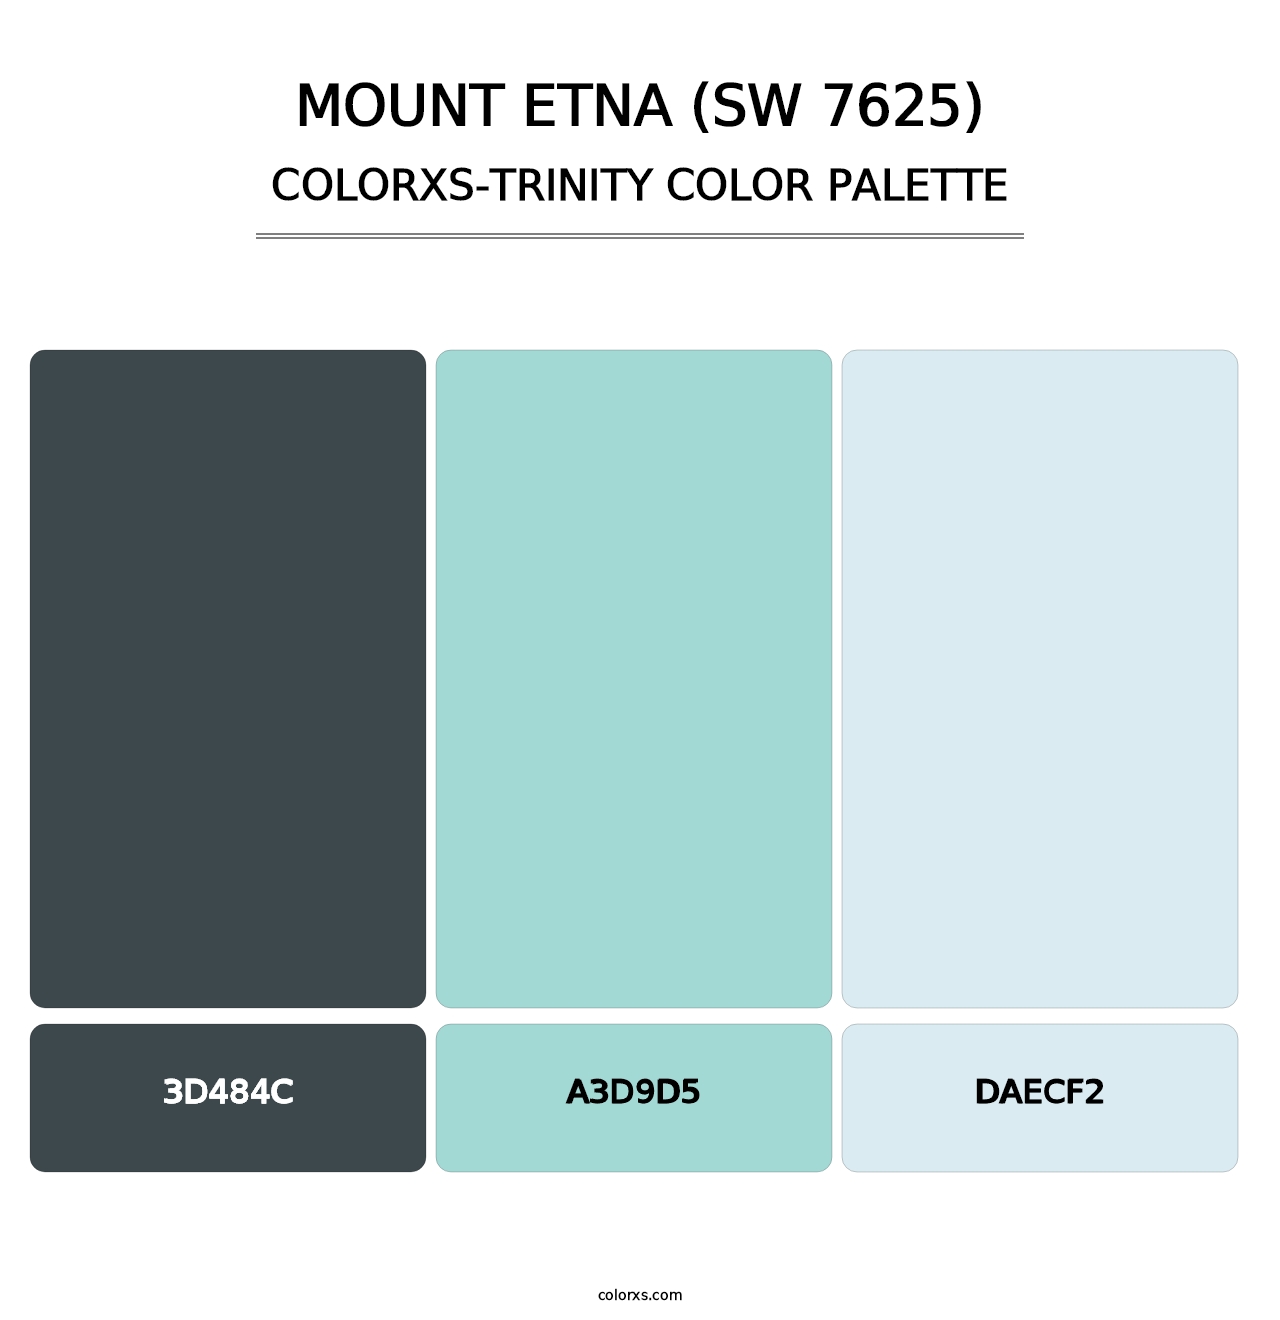 Mount Etna (SW 7625) - Colorxs Trinity Palette